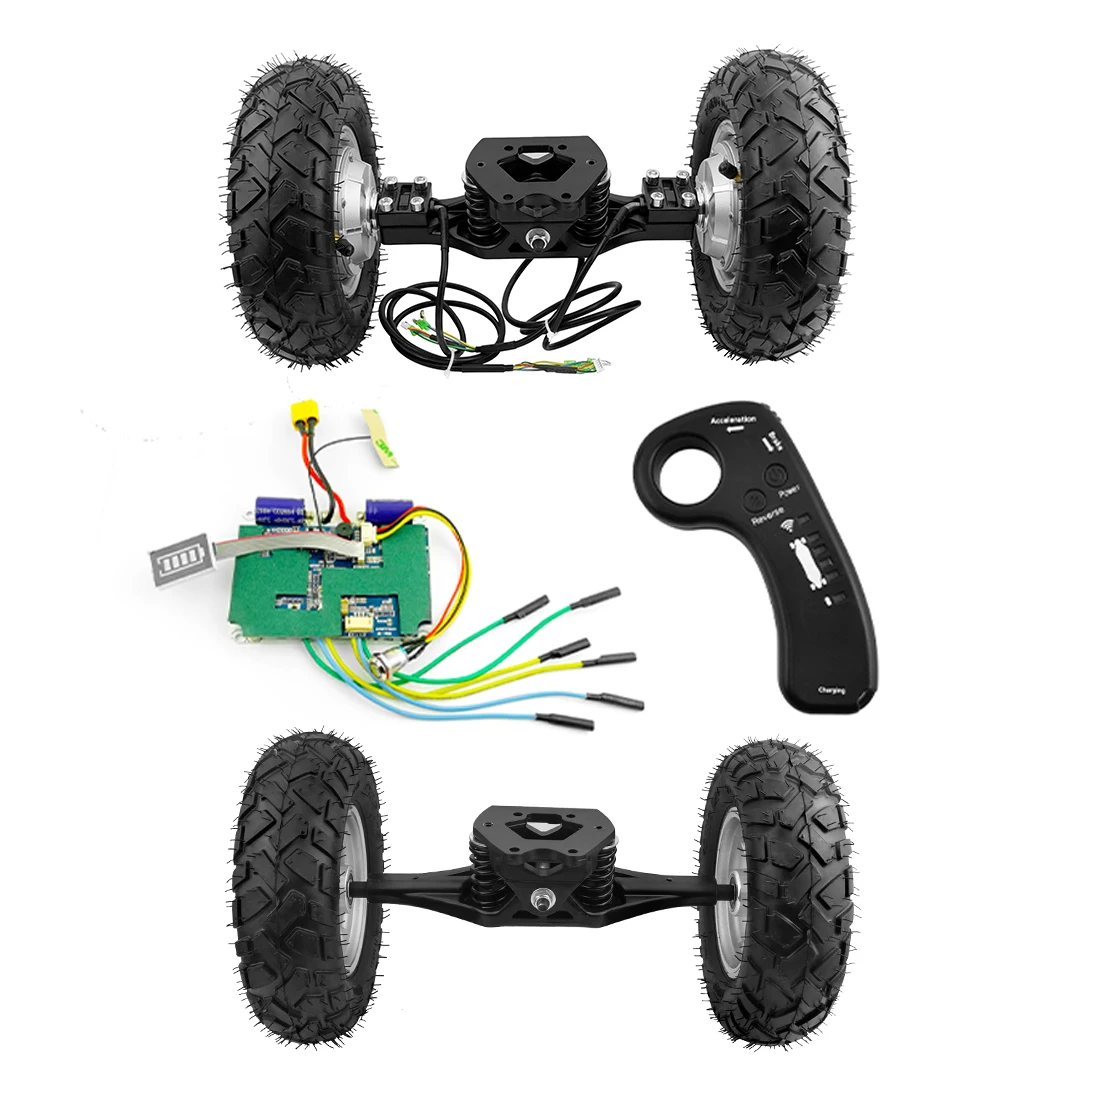 

High Speed Remote Control off road skate board dual direct drive Longboard diy electric skateboard hub motor kit